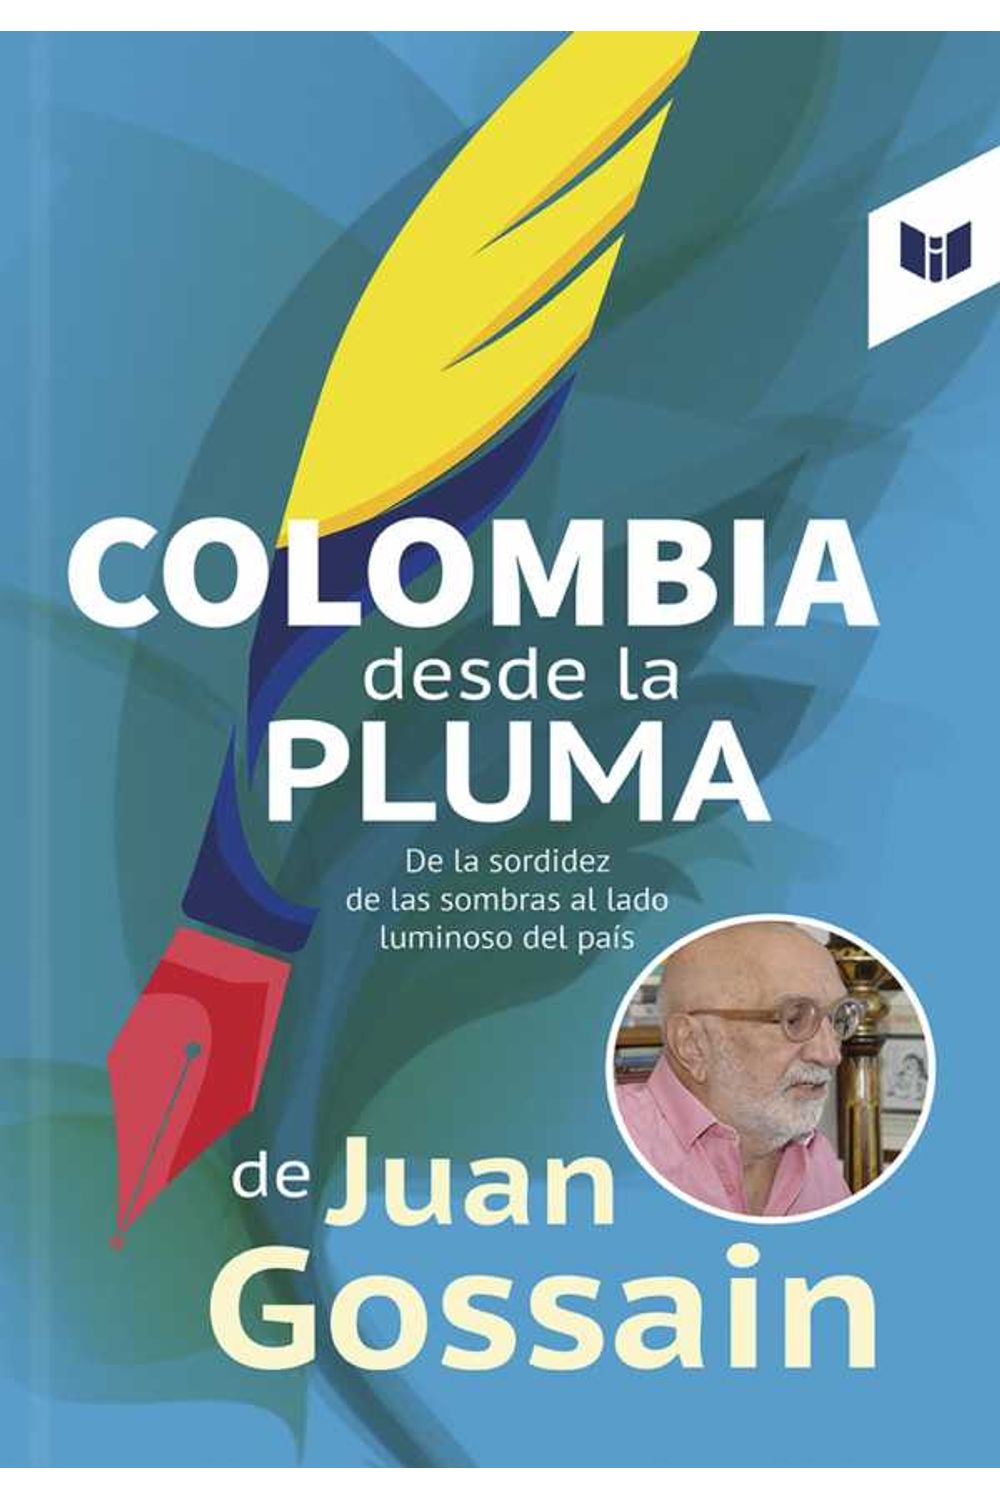 bw-colombia-desde-la-pluma-de-juan-gossain-intermedio-editores-sas-9789587579949